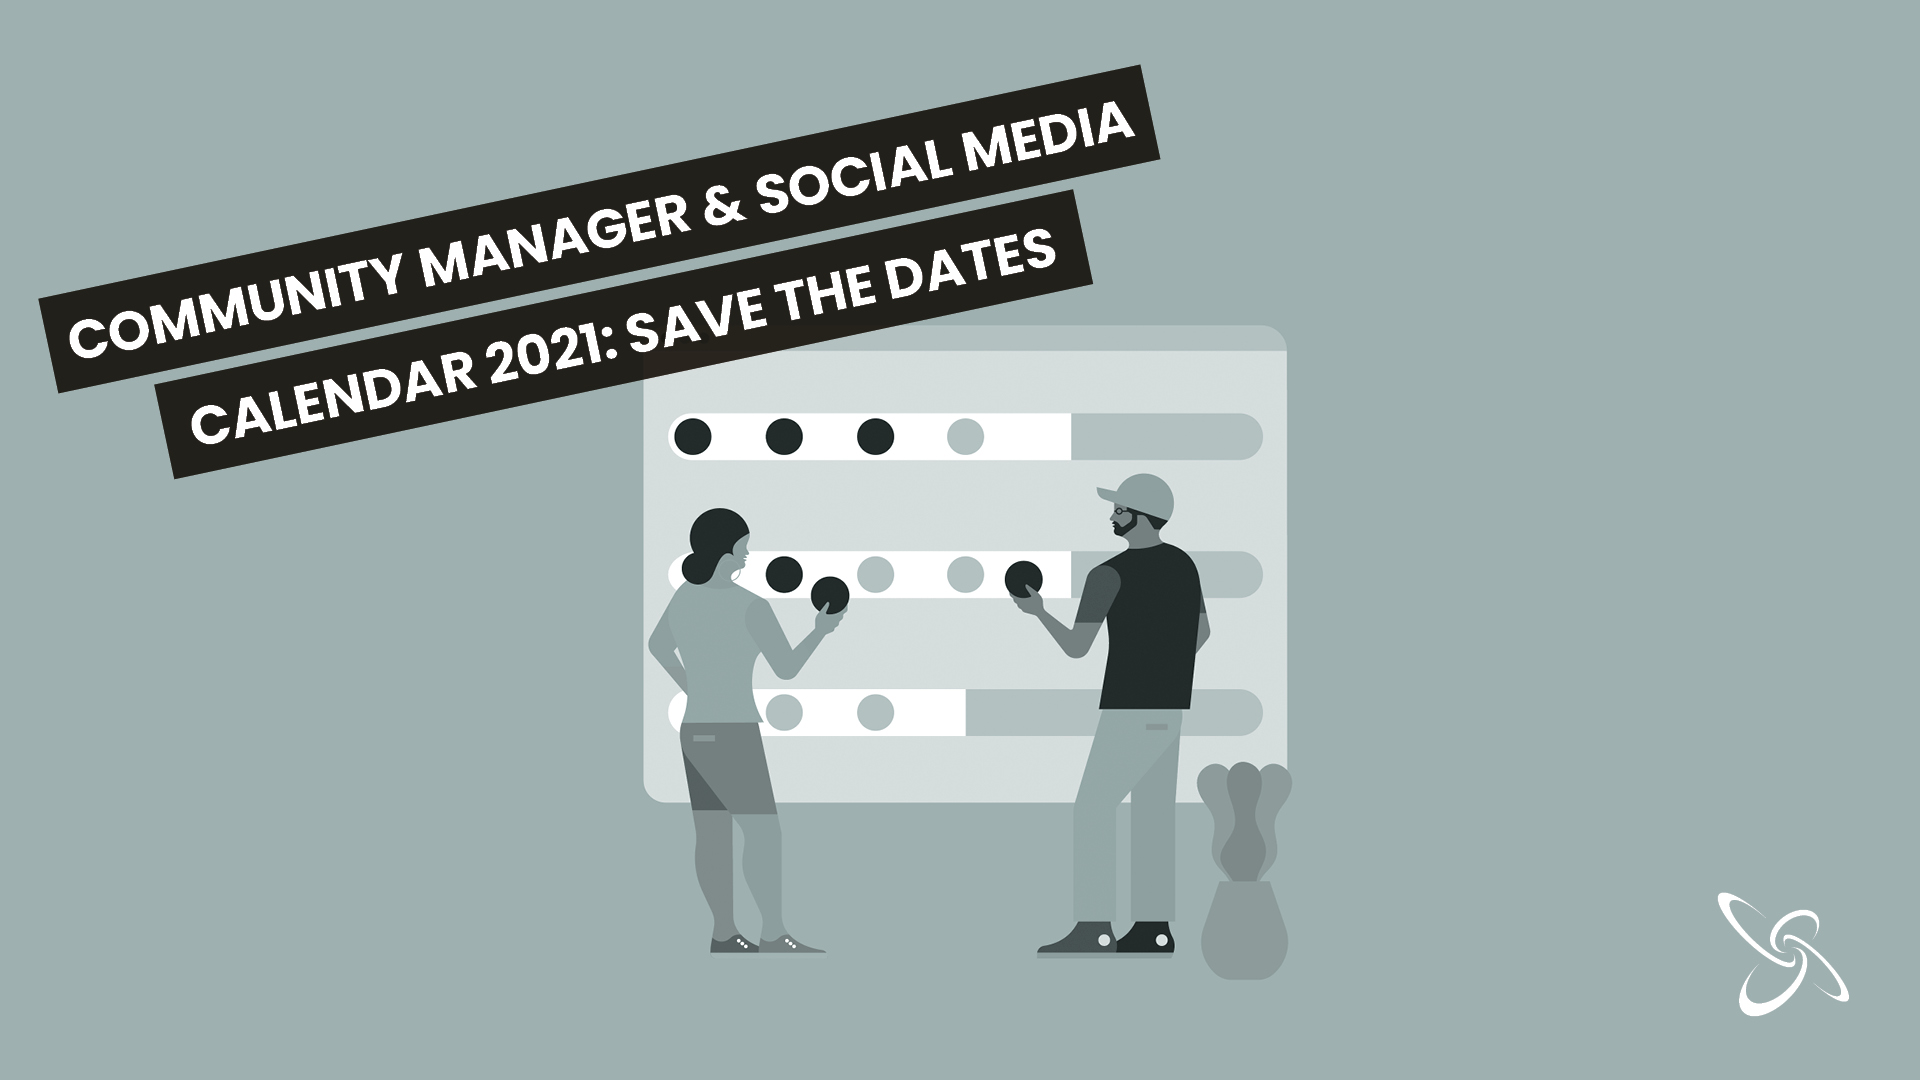 Community Manager & Social Media Calendar 2021